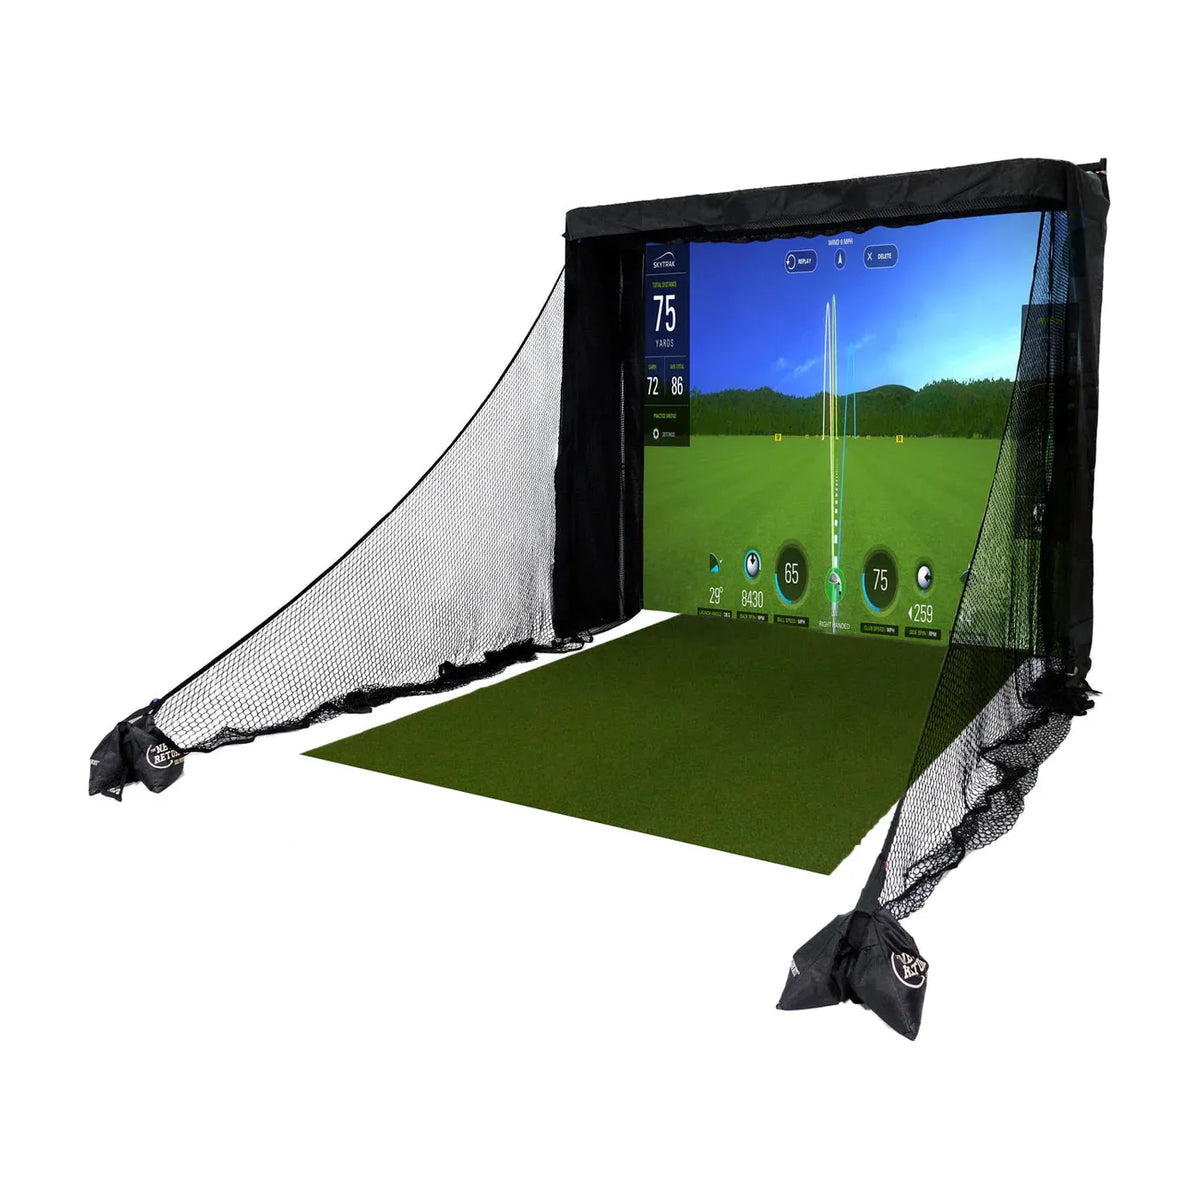 The Net Return: Simulator Series 10&#39; Golf Enclosure Package